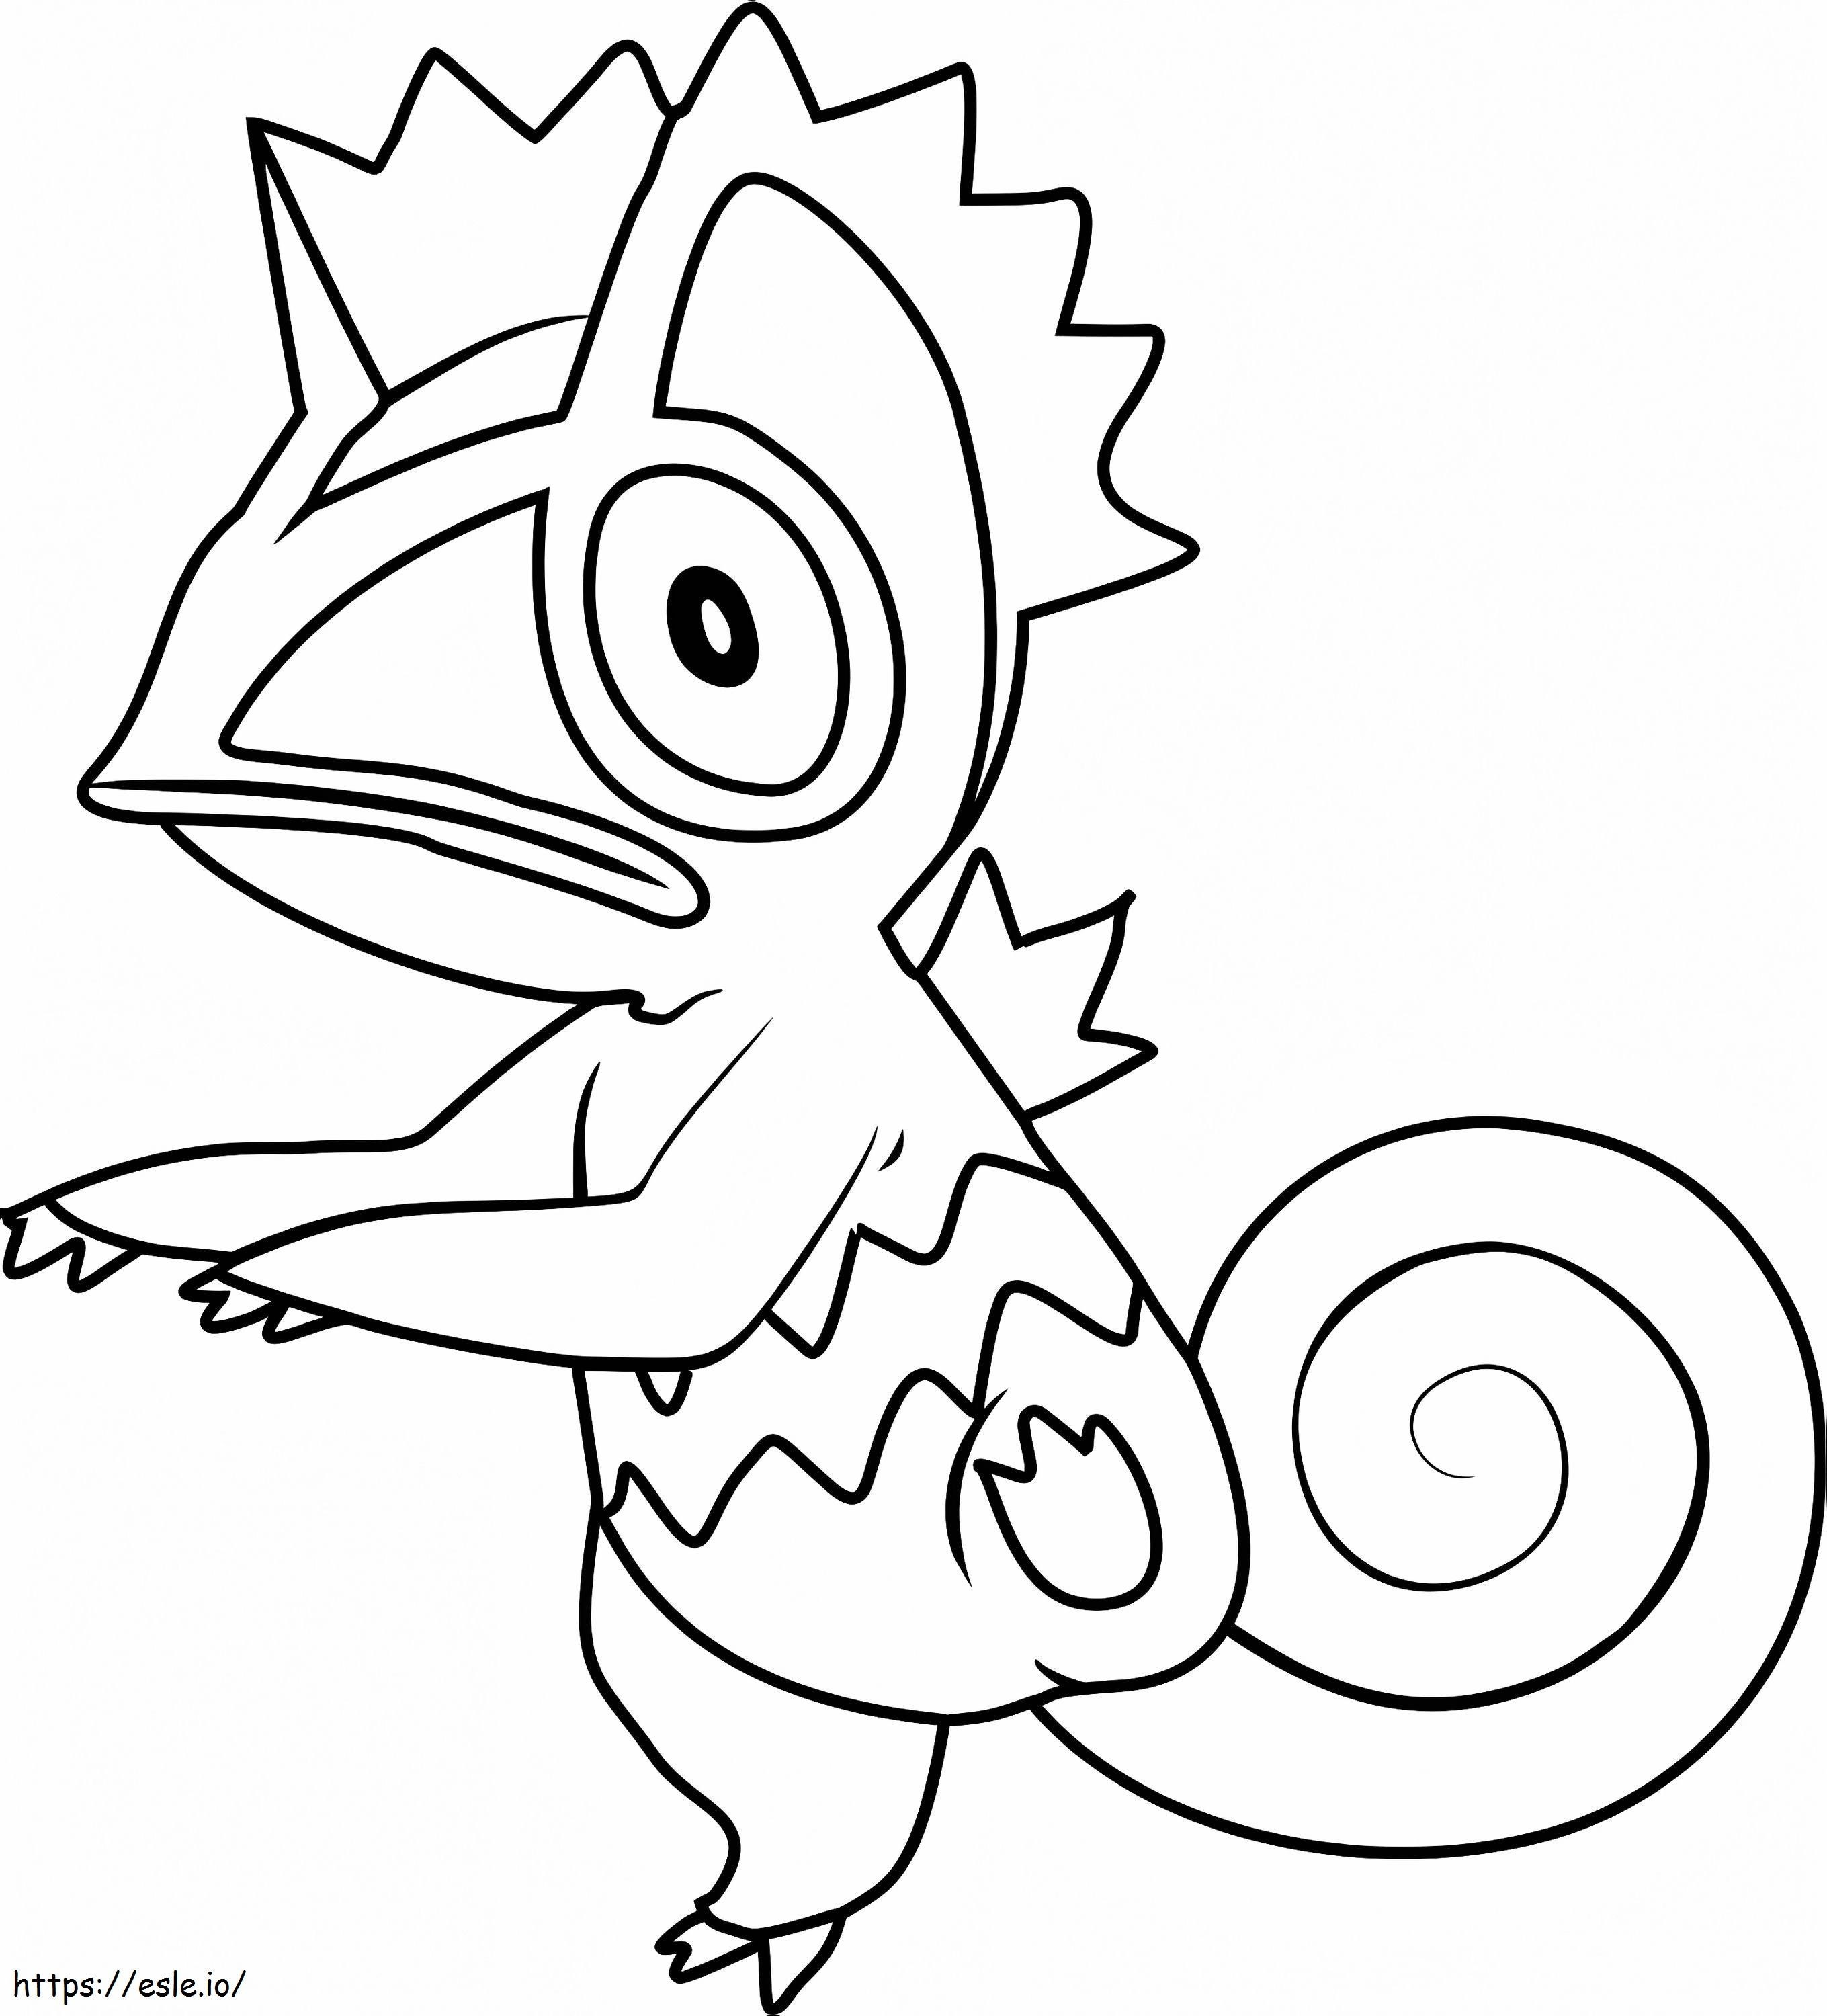 Kecleon-Pokémon ausmalbilder